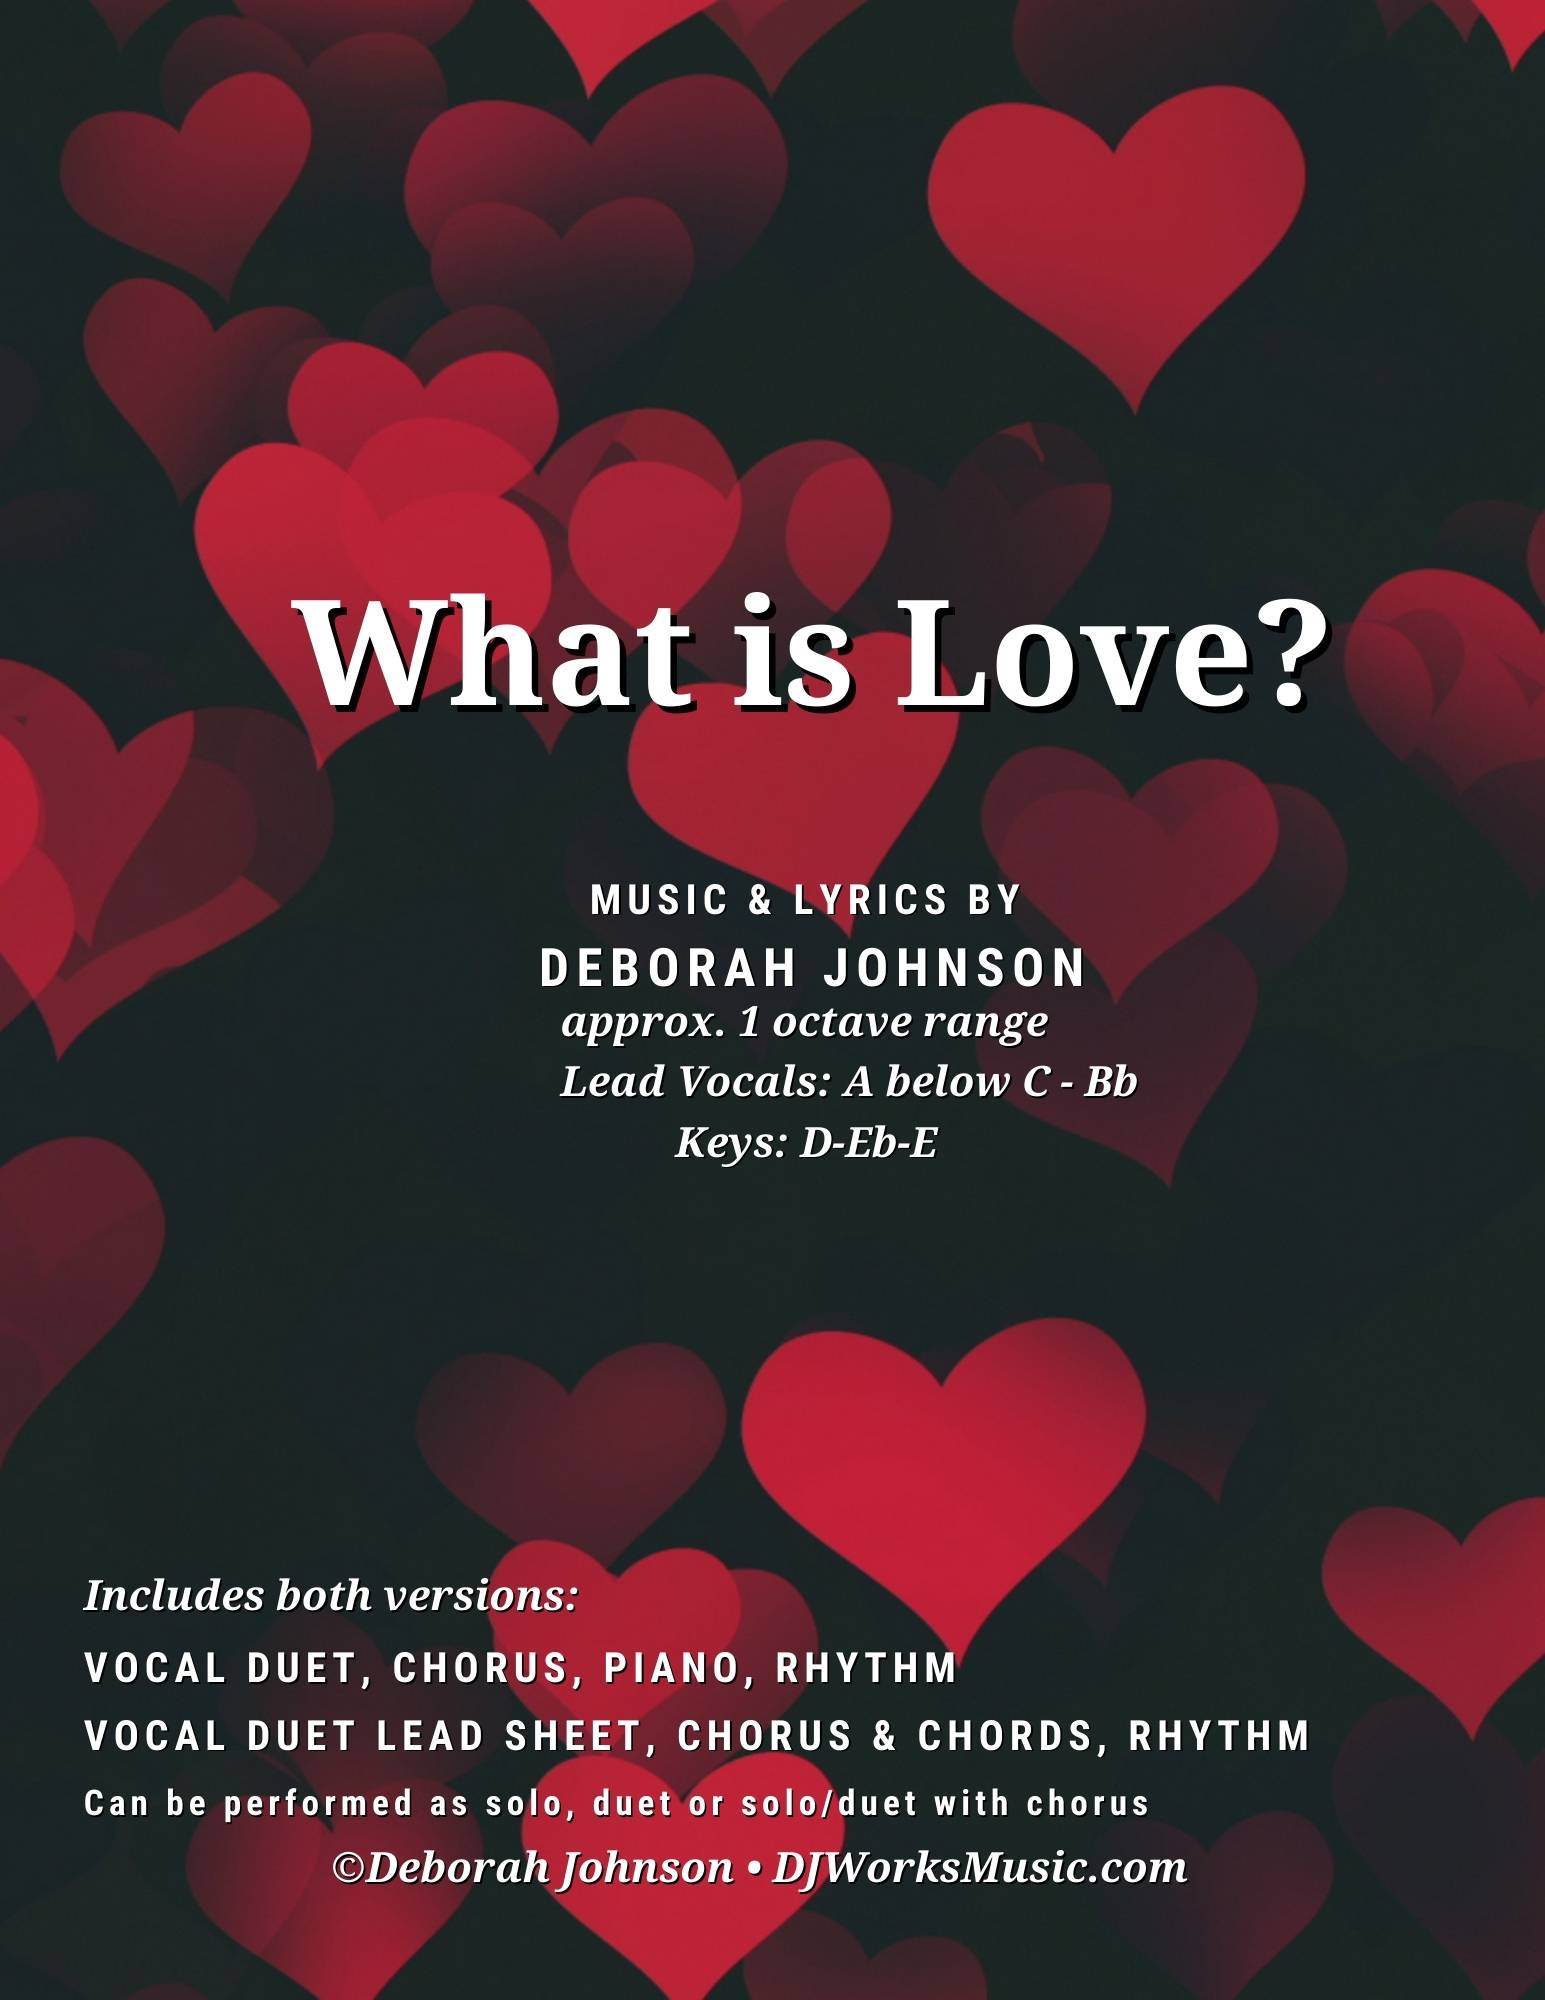 What is Love? Deborah Johnson